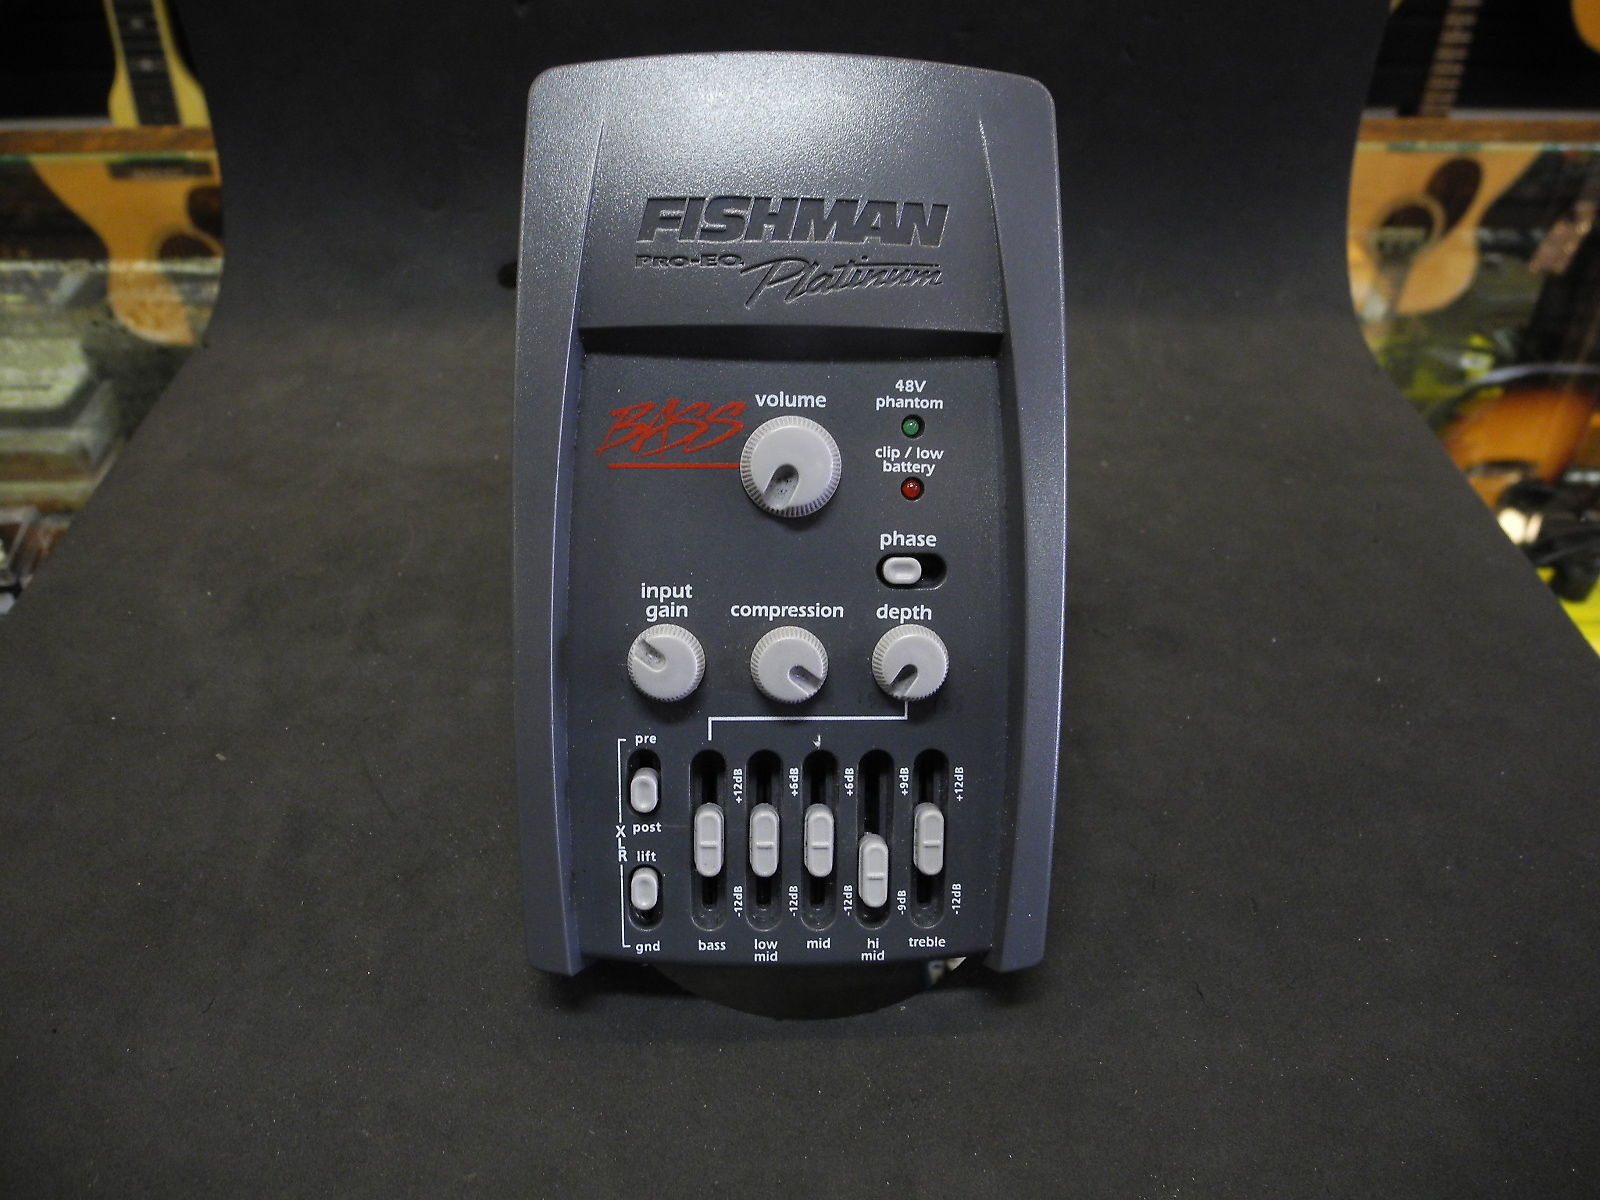 Fishman Pro EQ Platinum Bass 5-Band EQ | Reverb